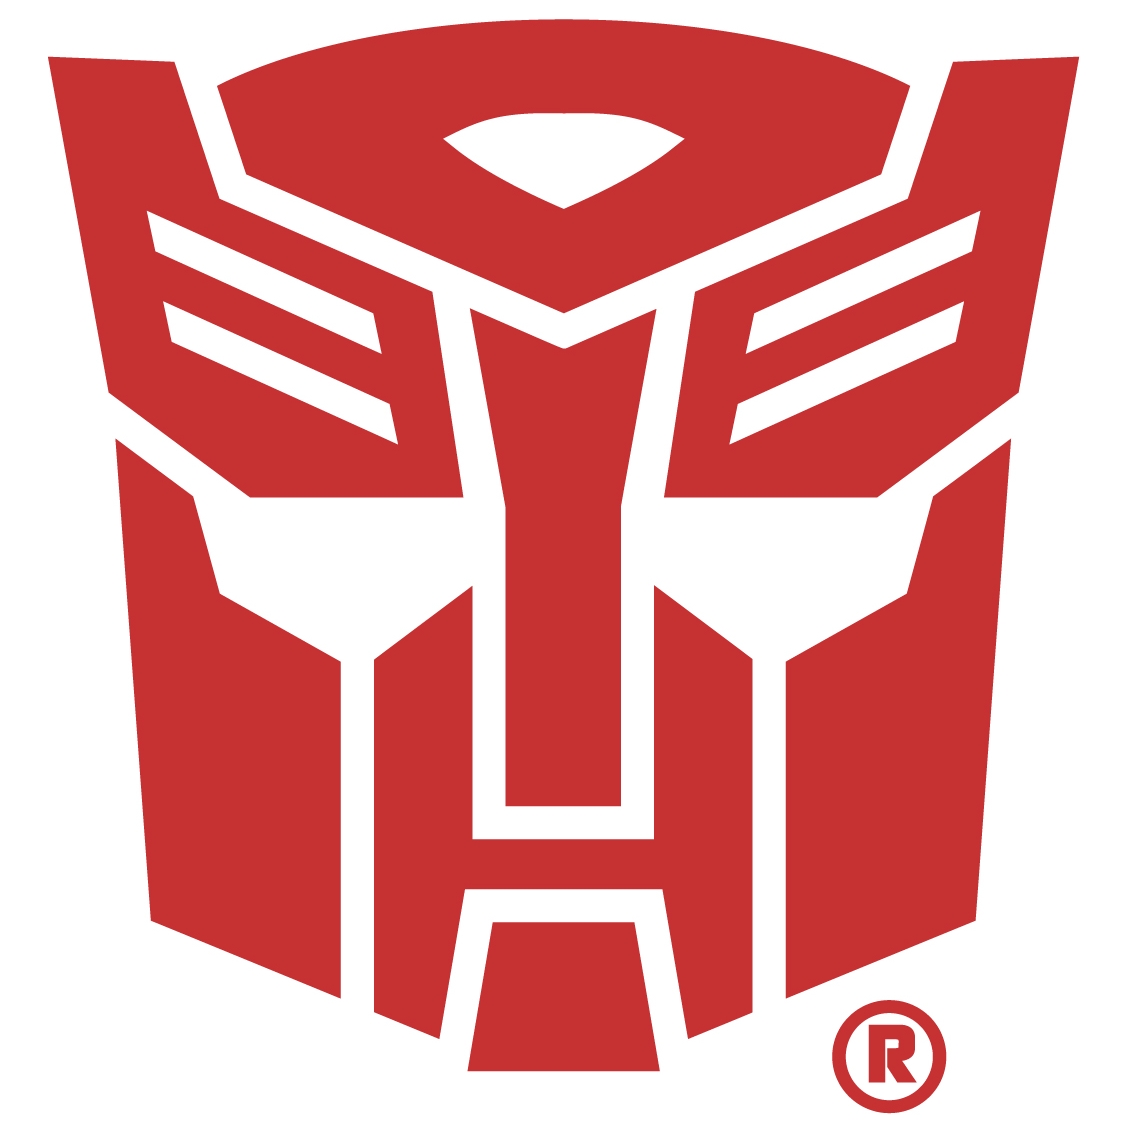 ... Transformers autobots logo clipart - ClipartFox ...